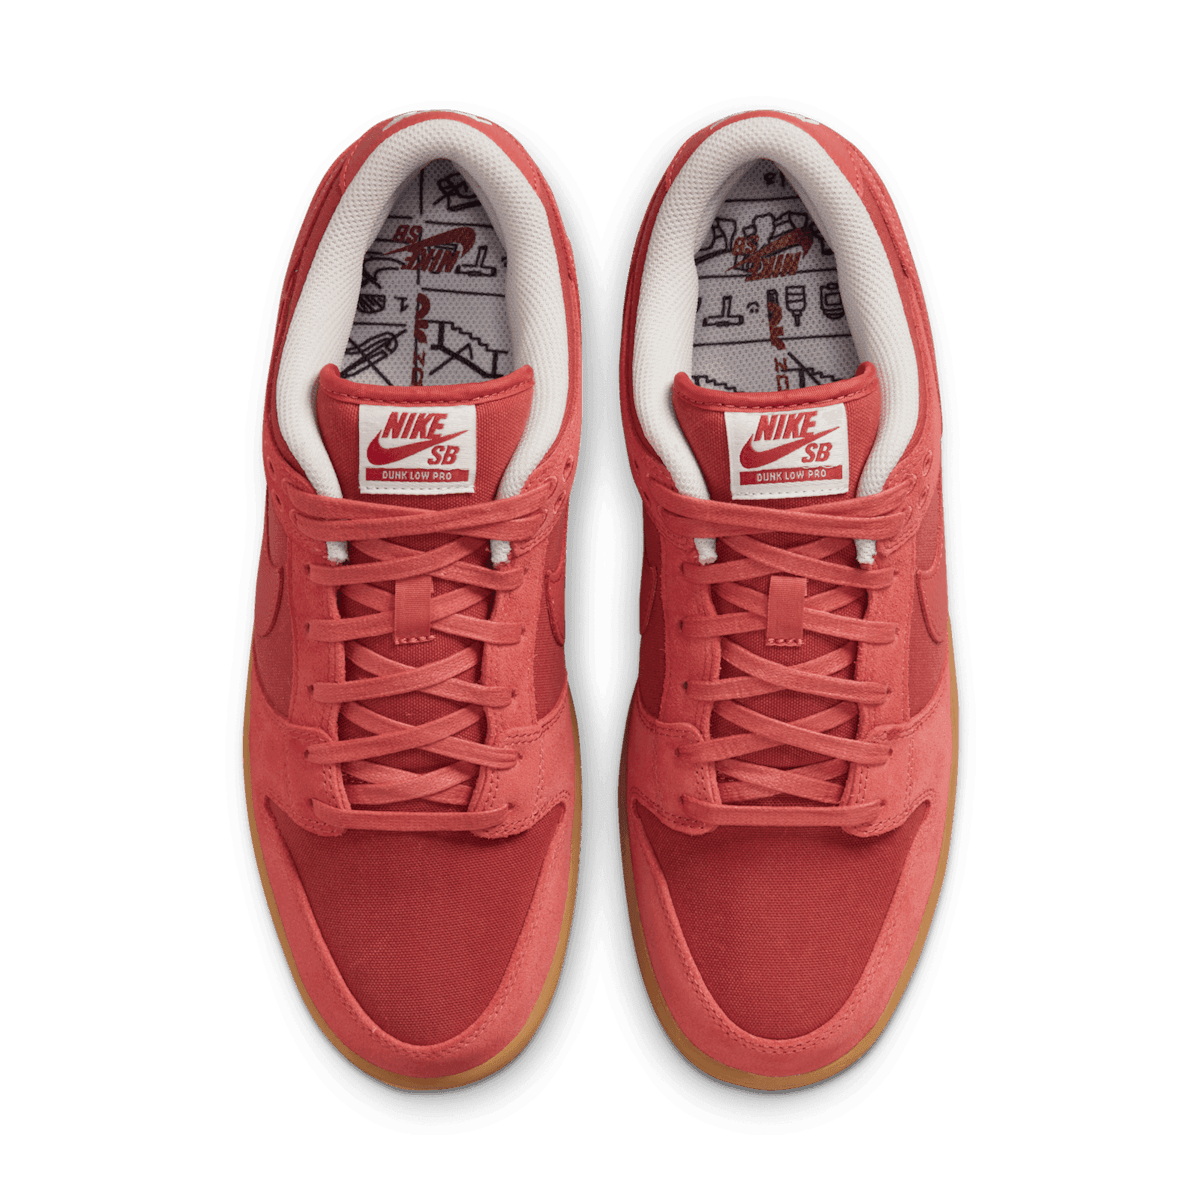 Nike SB Dunk Low Adobe - DV5429-600 Raffles and Release Date